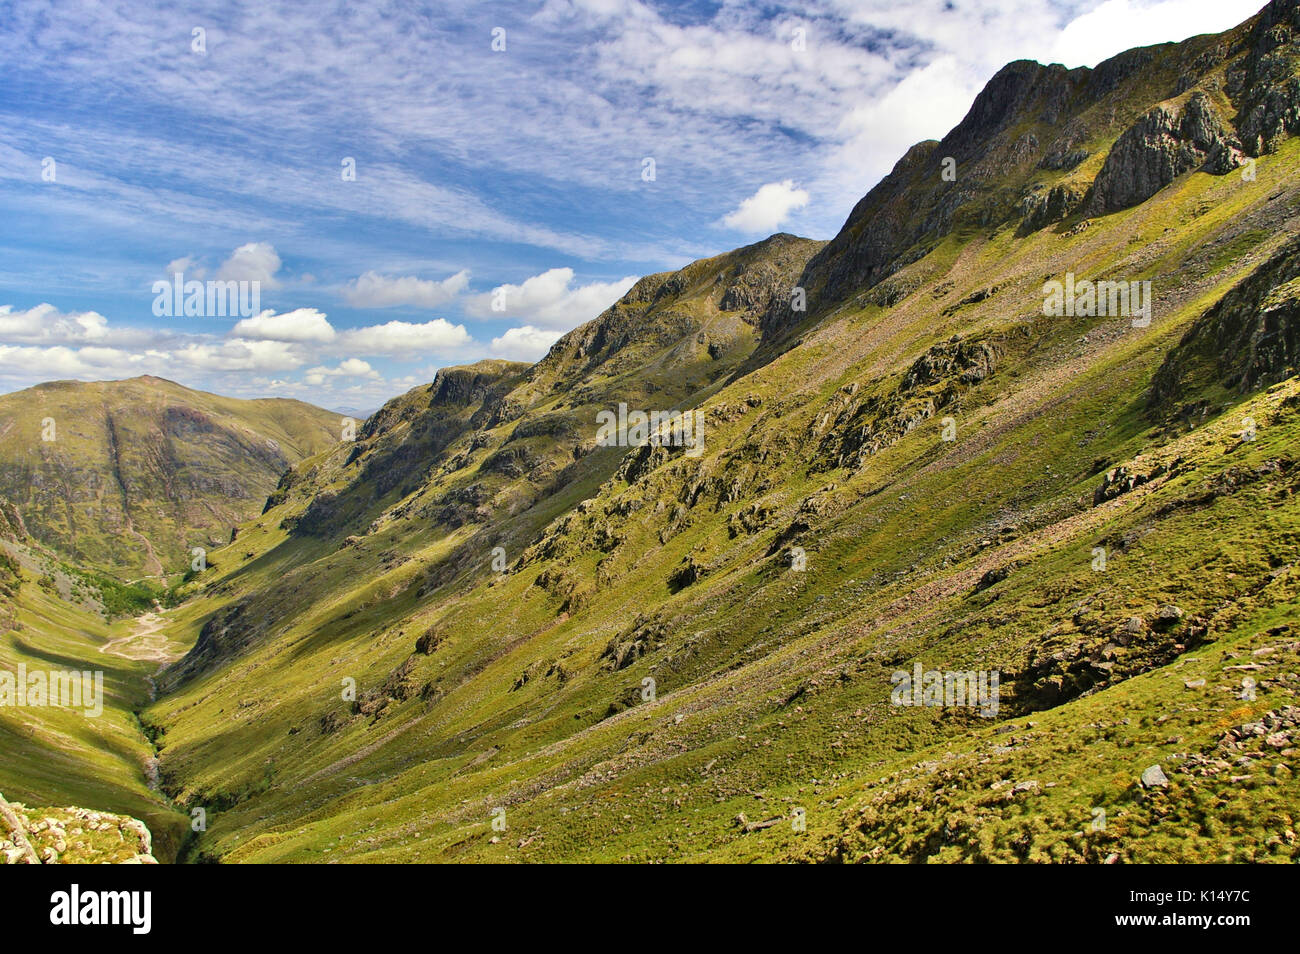 Lost Valley, Glencoe, Scotland with ridge and steep slopes Stock Photo